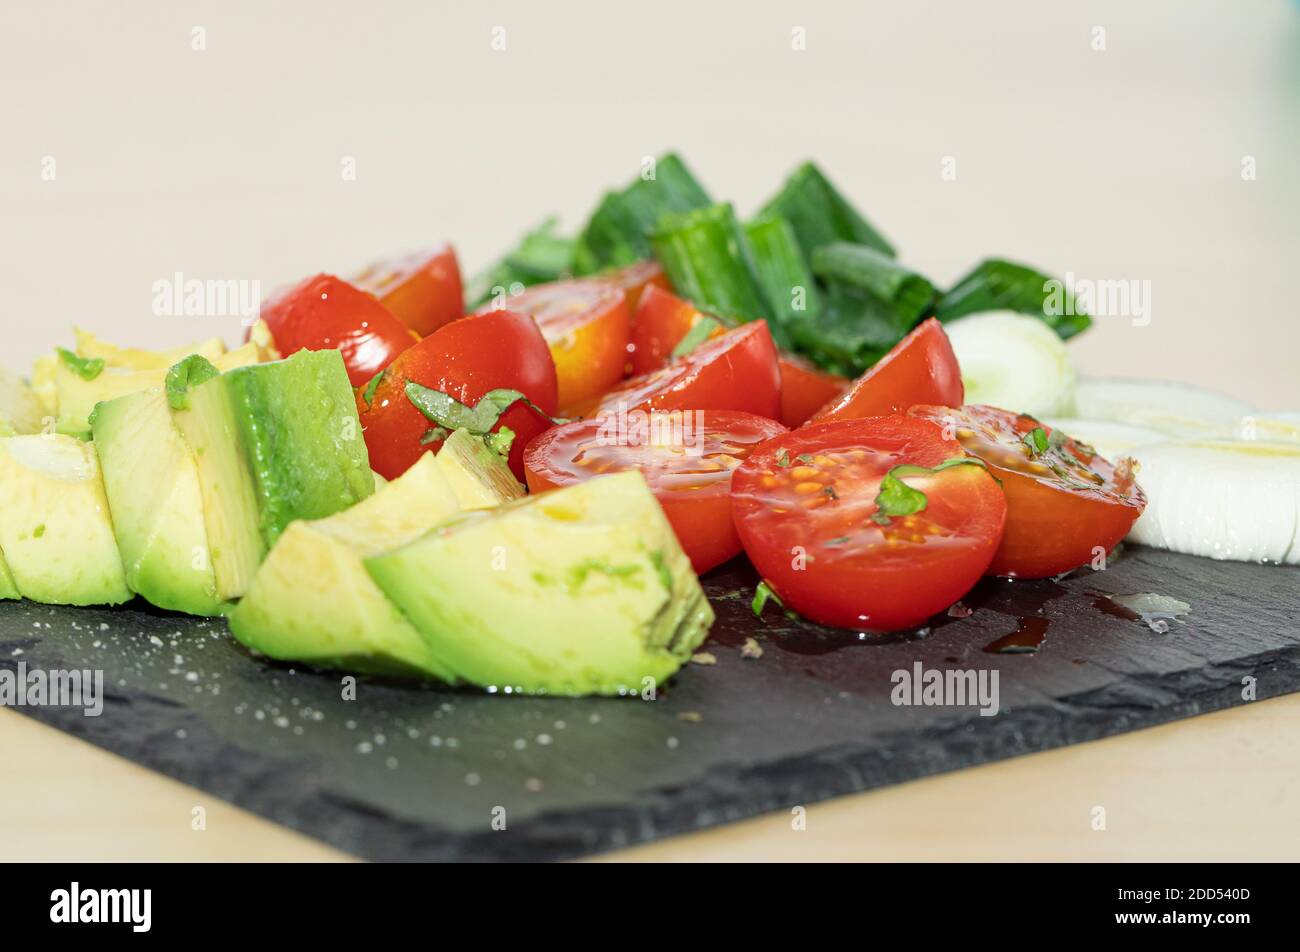 Salad - avocado, spring onion and tomato stock photo Stock Photo